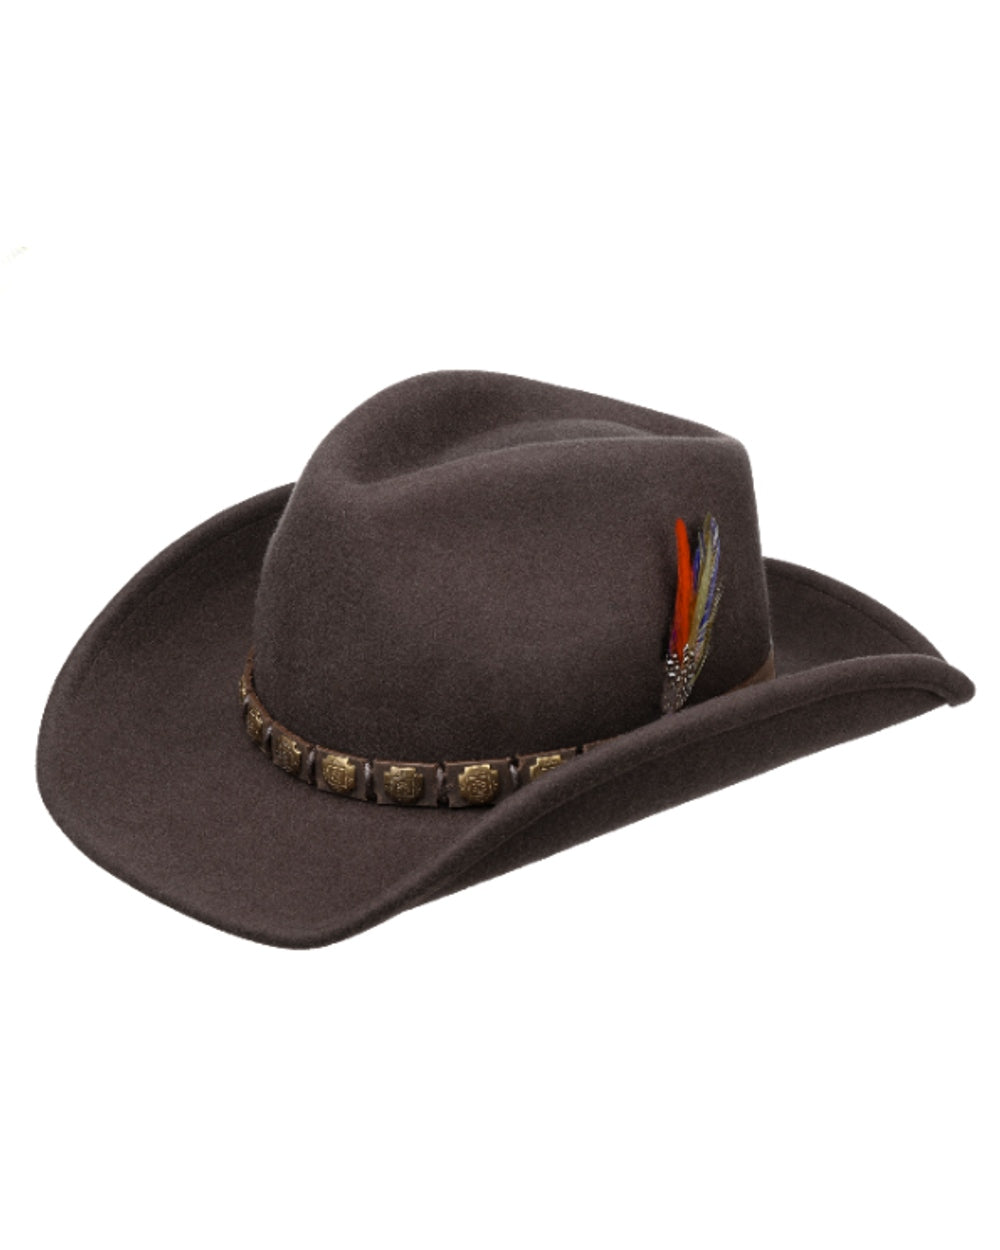 Stetson Hackberry Western Hat in Chocolate 